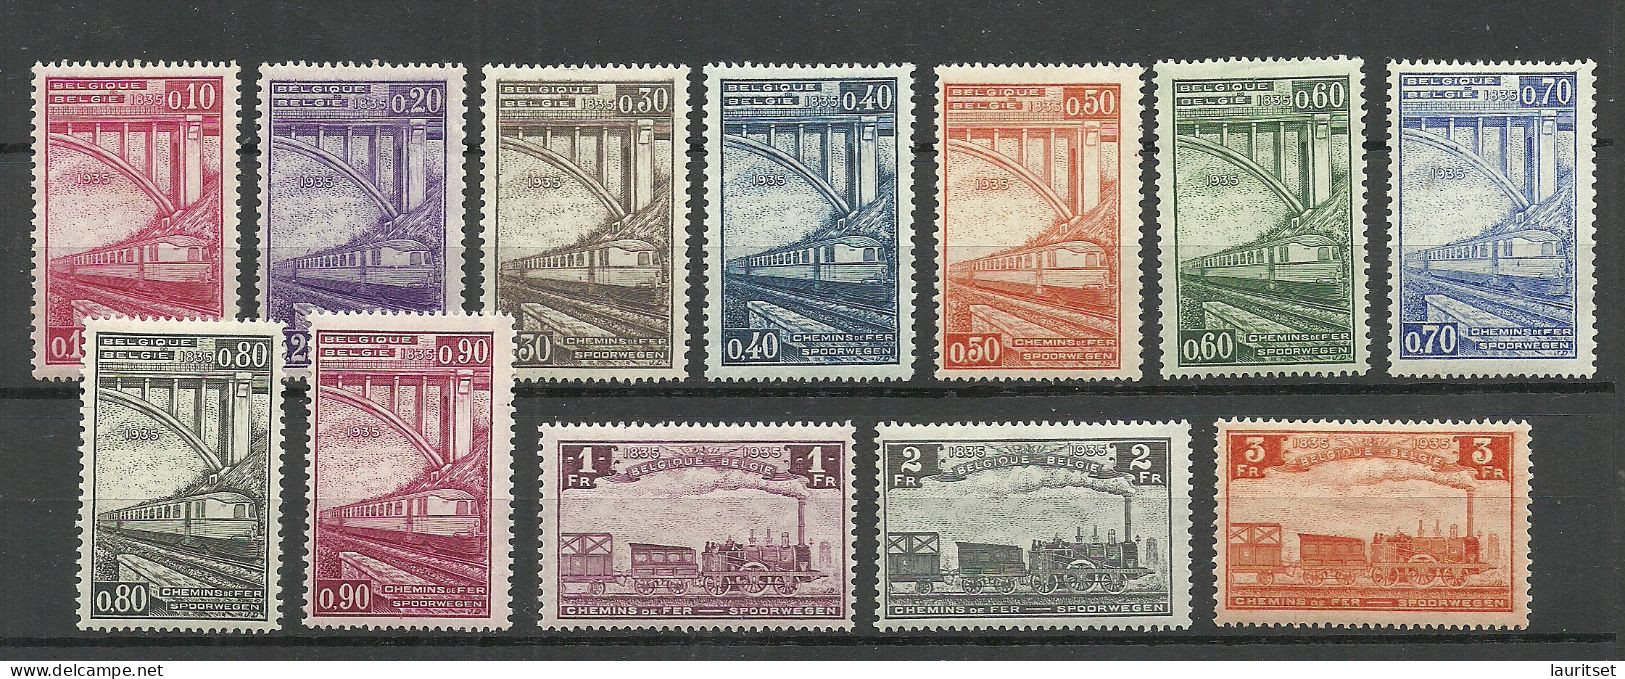 BELGIEN Belgium Belgique 1935 Michel 171 - 182 Eisenbahnpaketmarken Railway Packet Stamps * - Ungebraucht